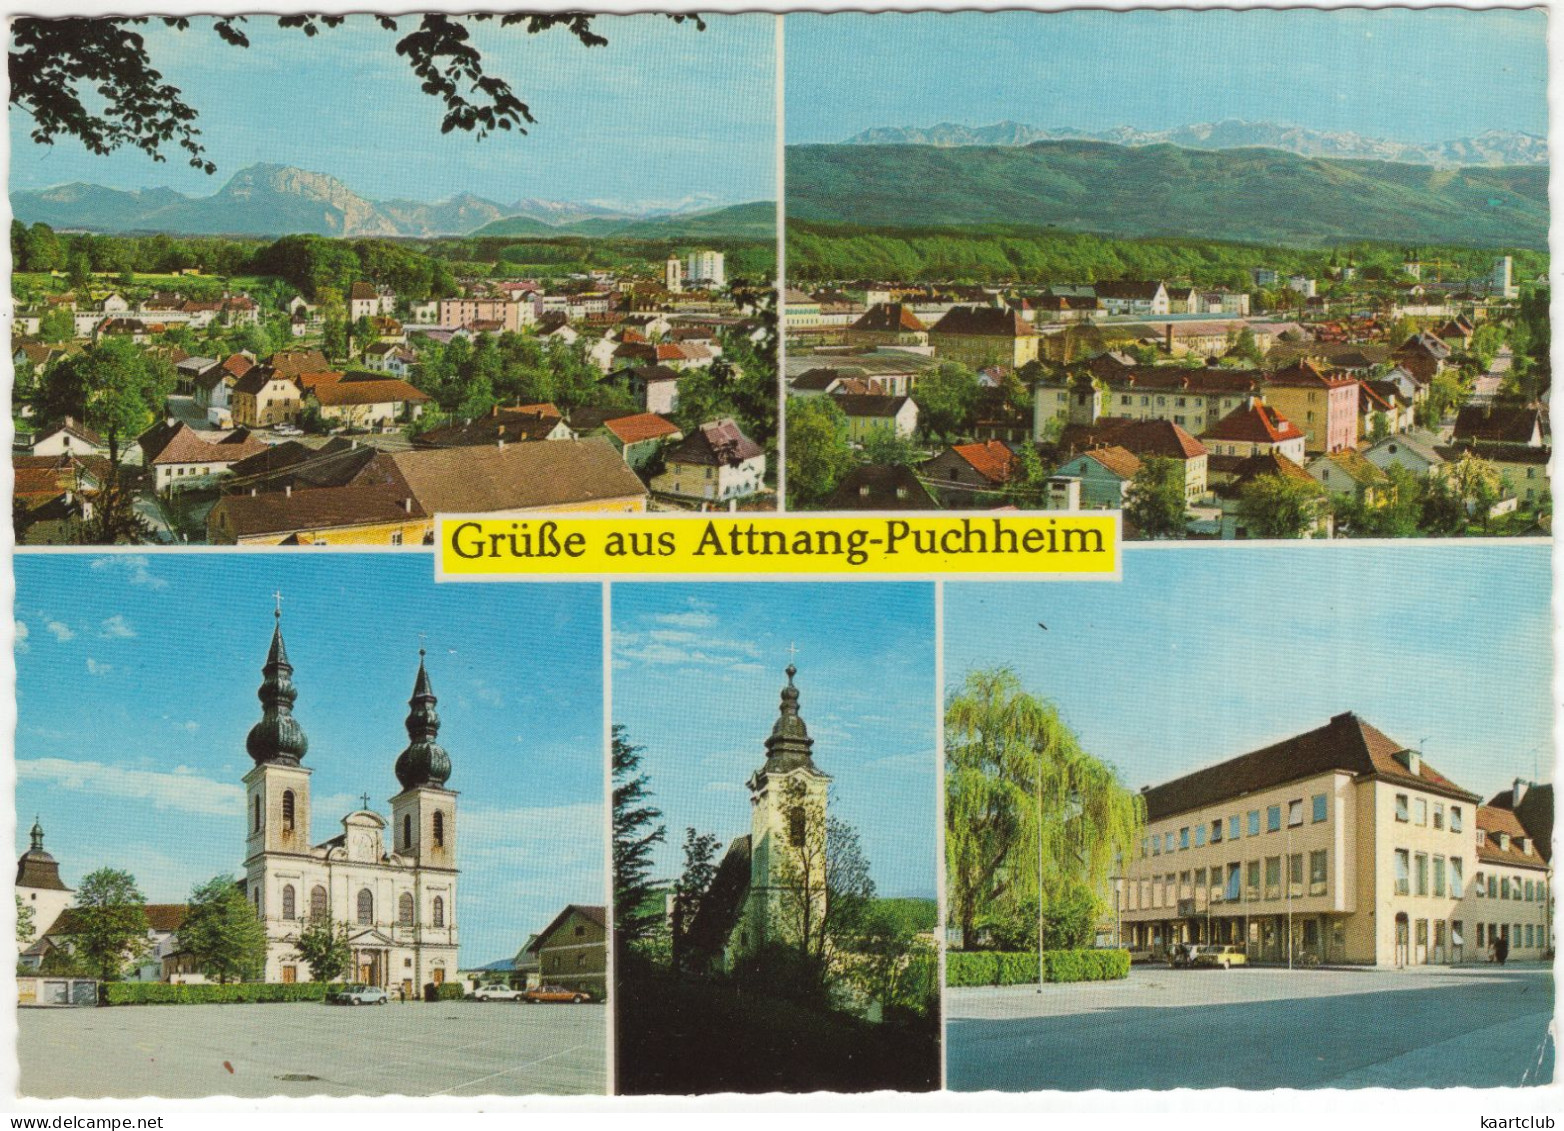 Attnang-Puchheim - Basilika, Puchheim, Kirche, Motiv - (OÖ., Österreich/Austria) - Attnang-Pucheim